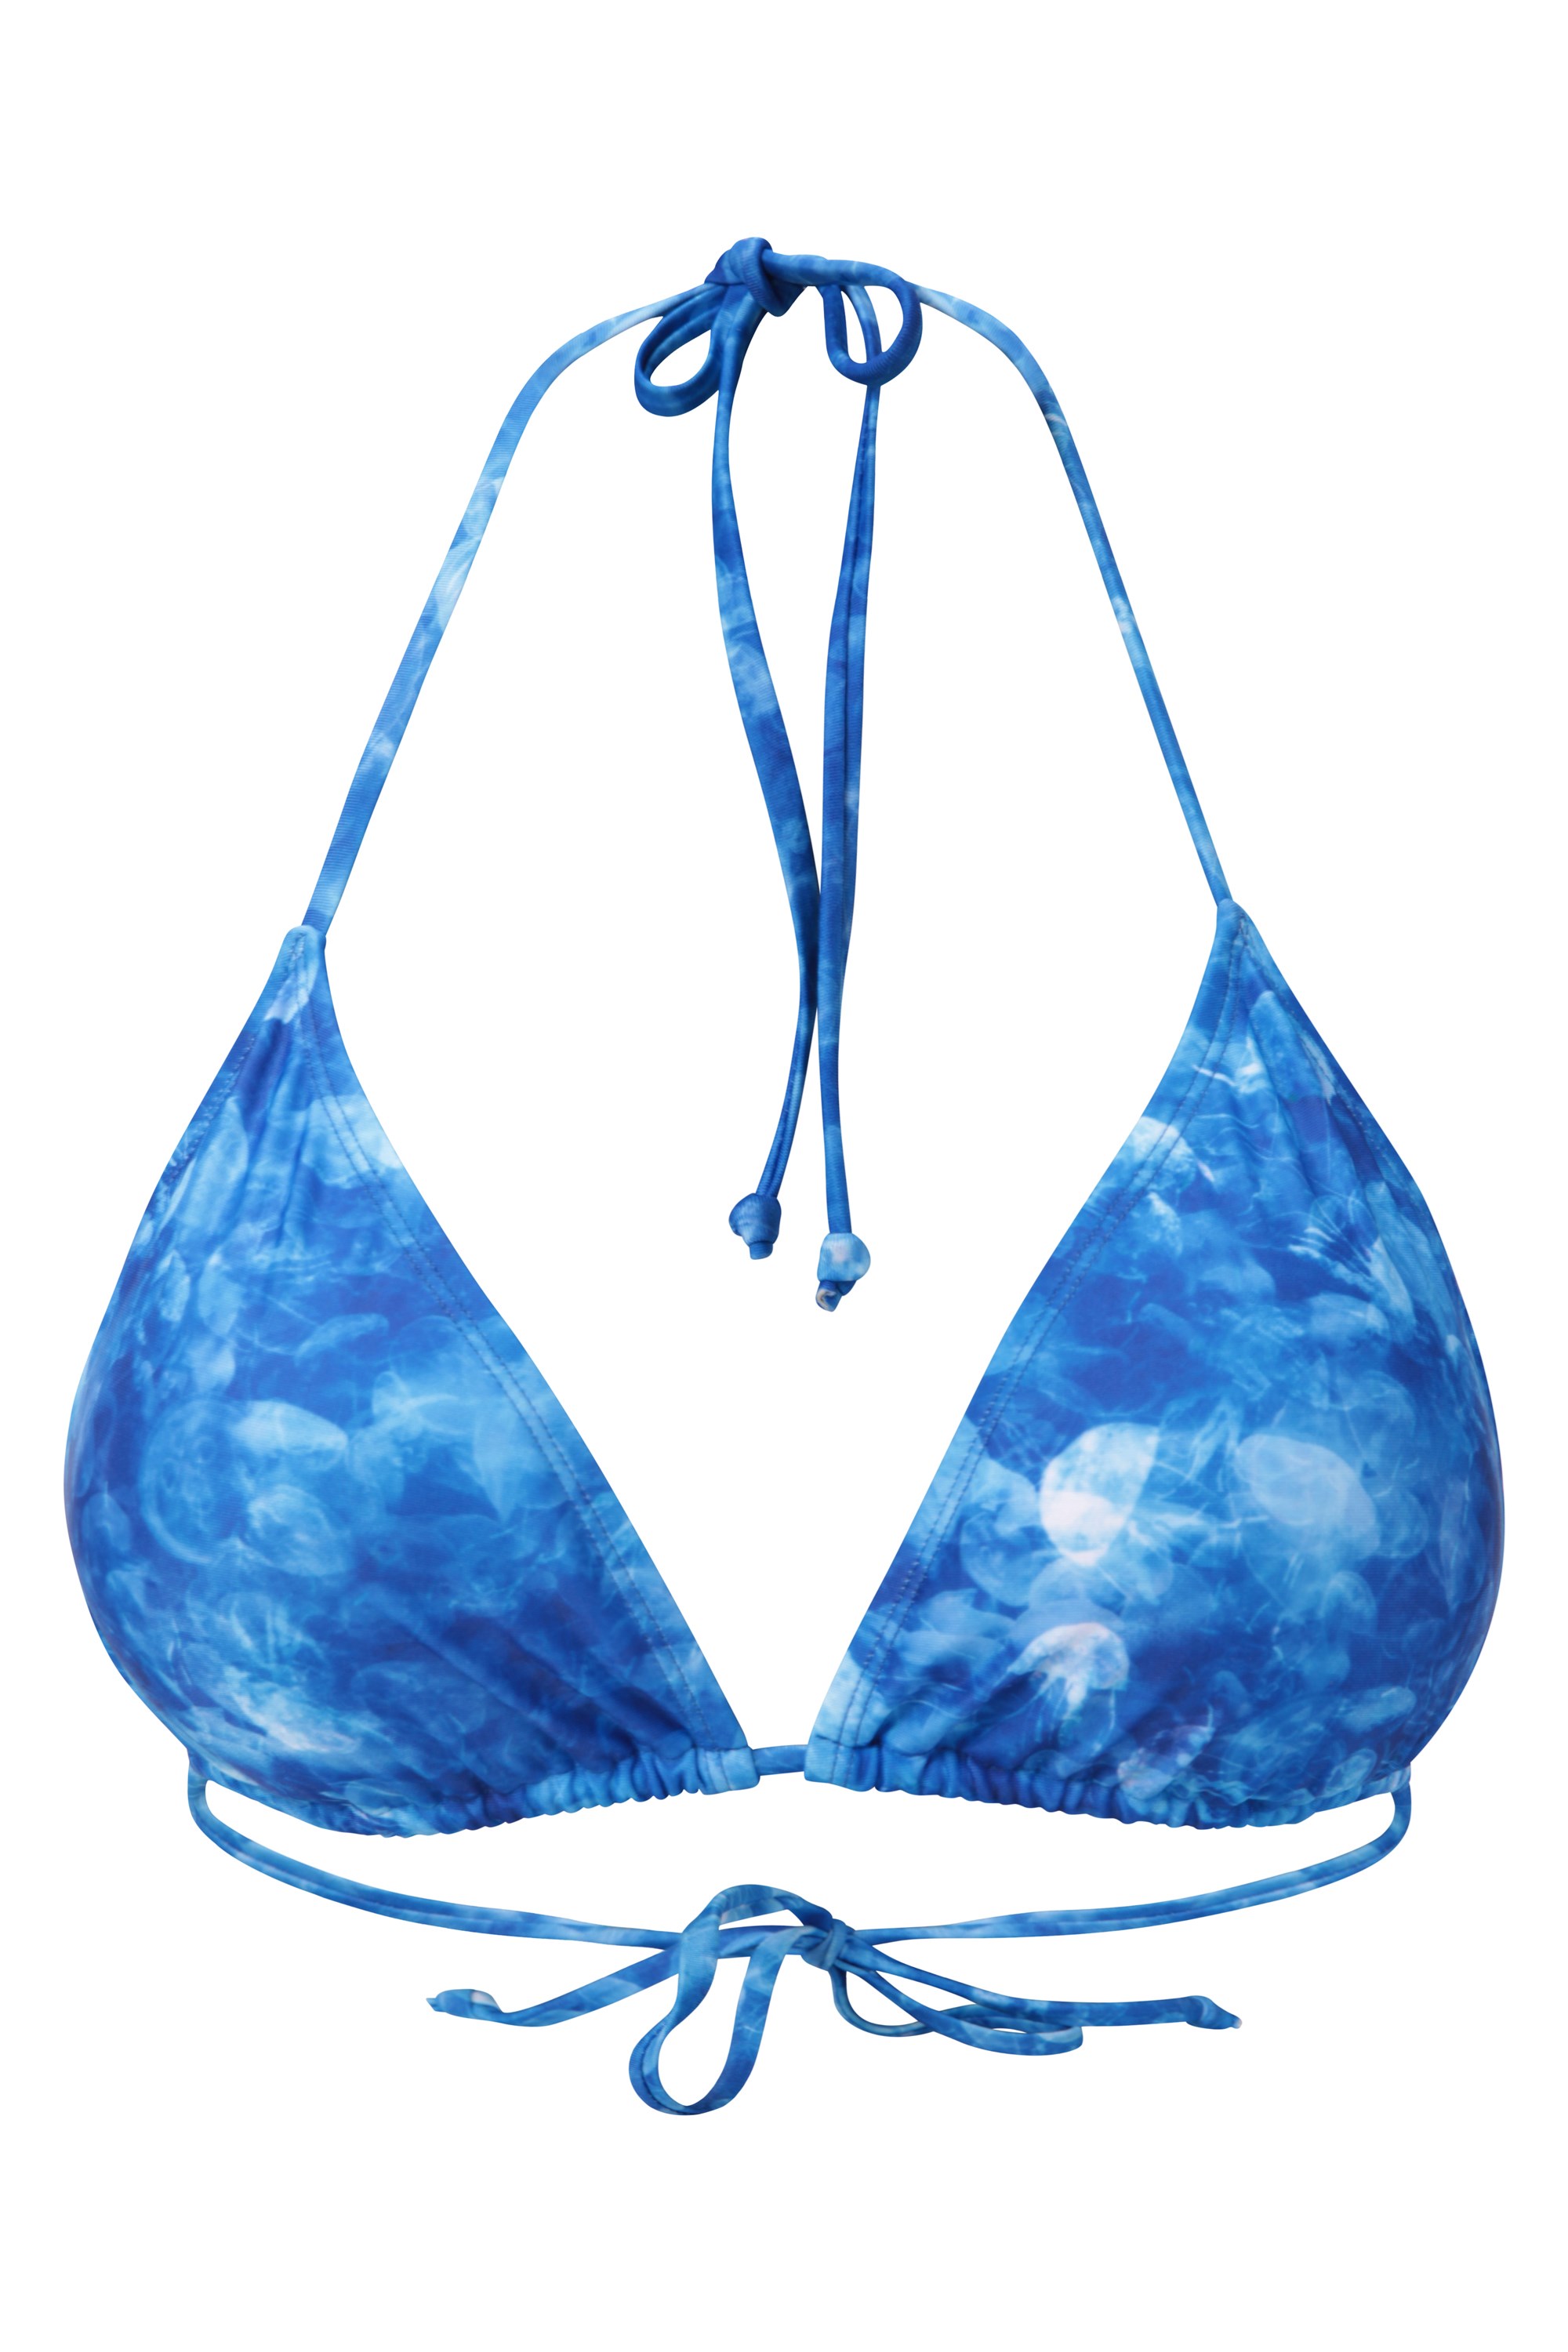 Haut de Bikini réglable South Beach - Bleu